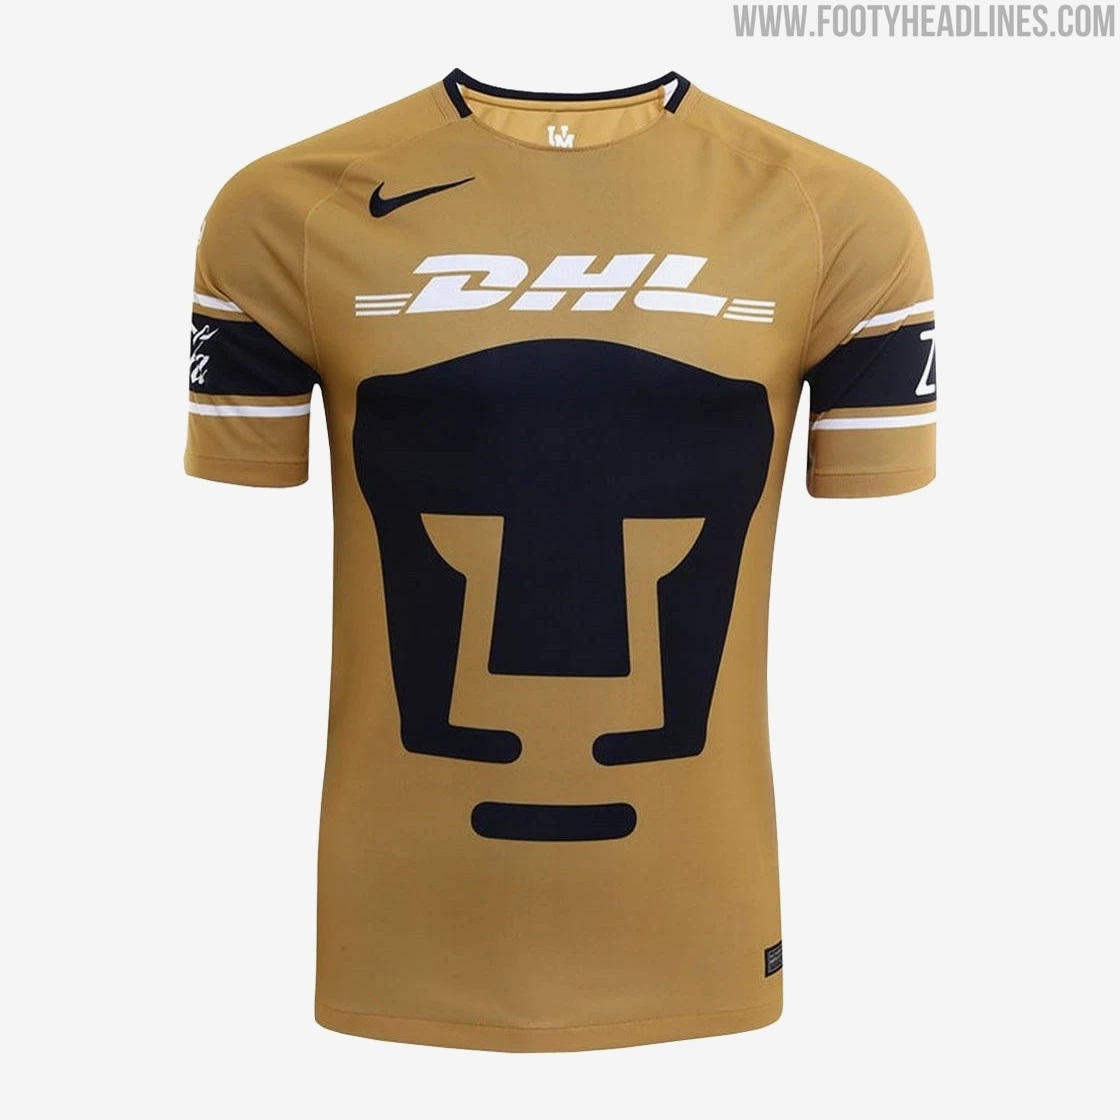 Gold Pumas 2021 Third Kit Released - Footy Headlines